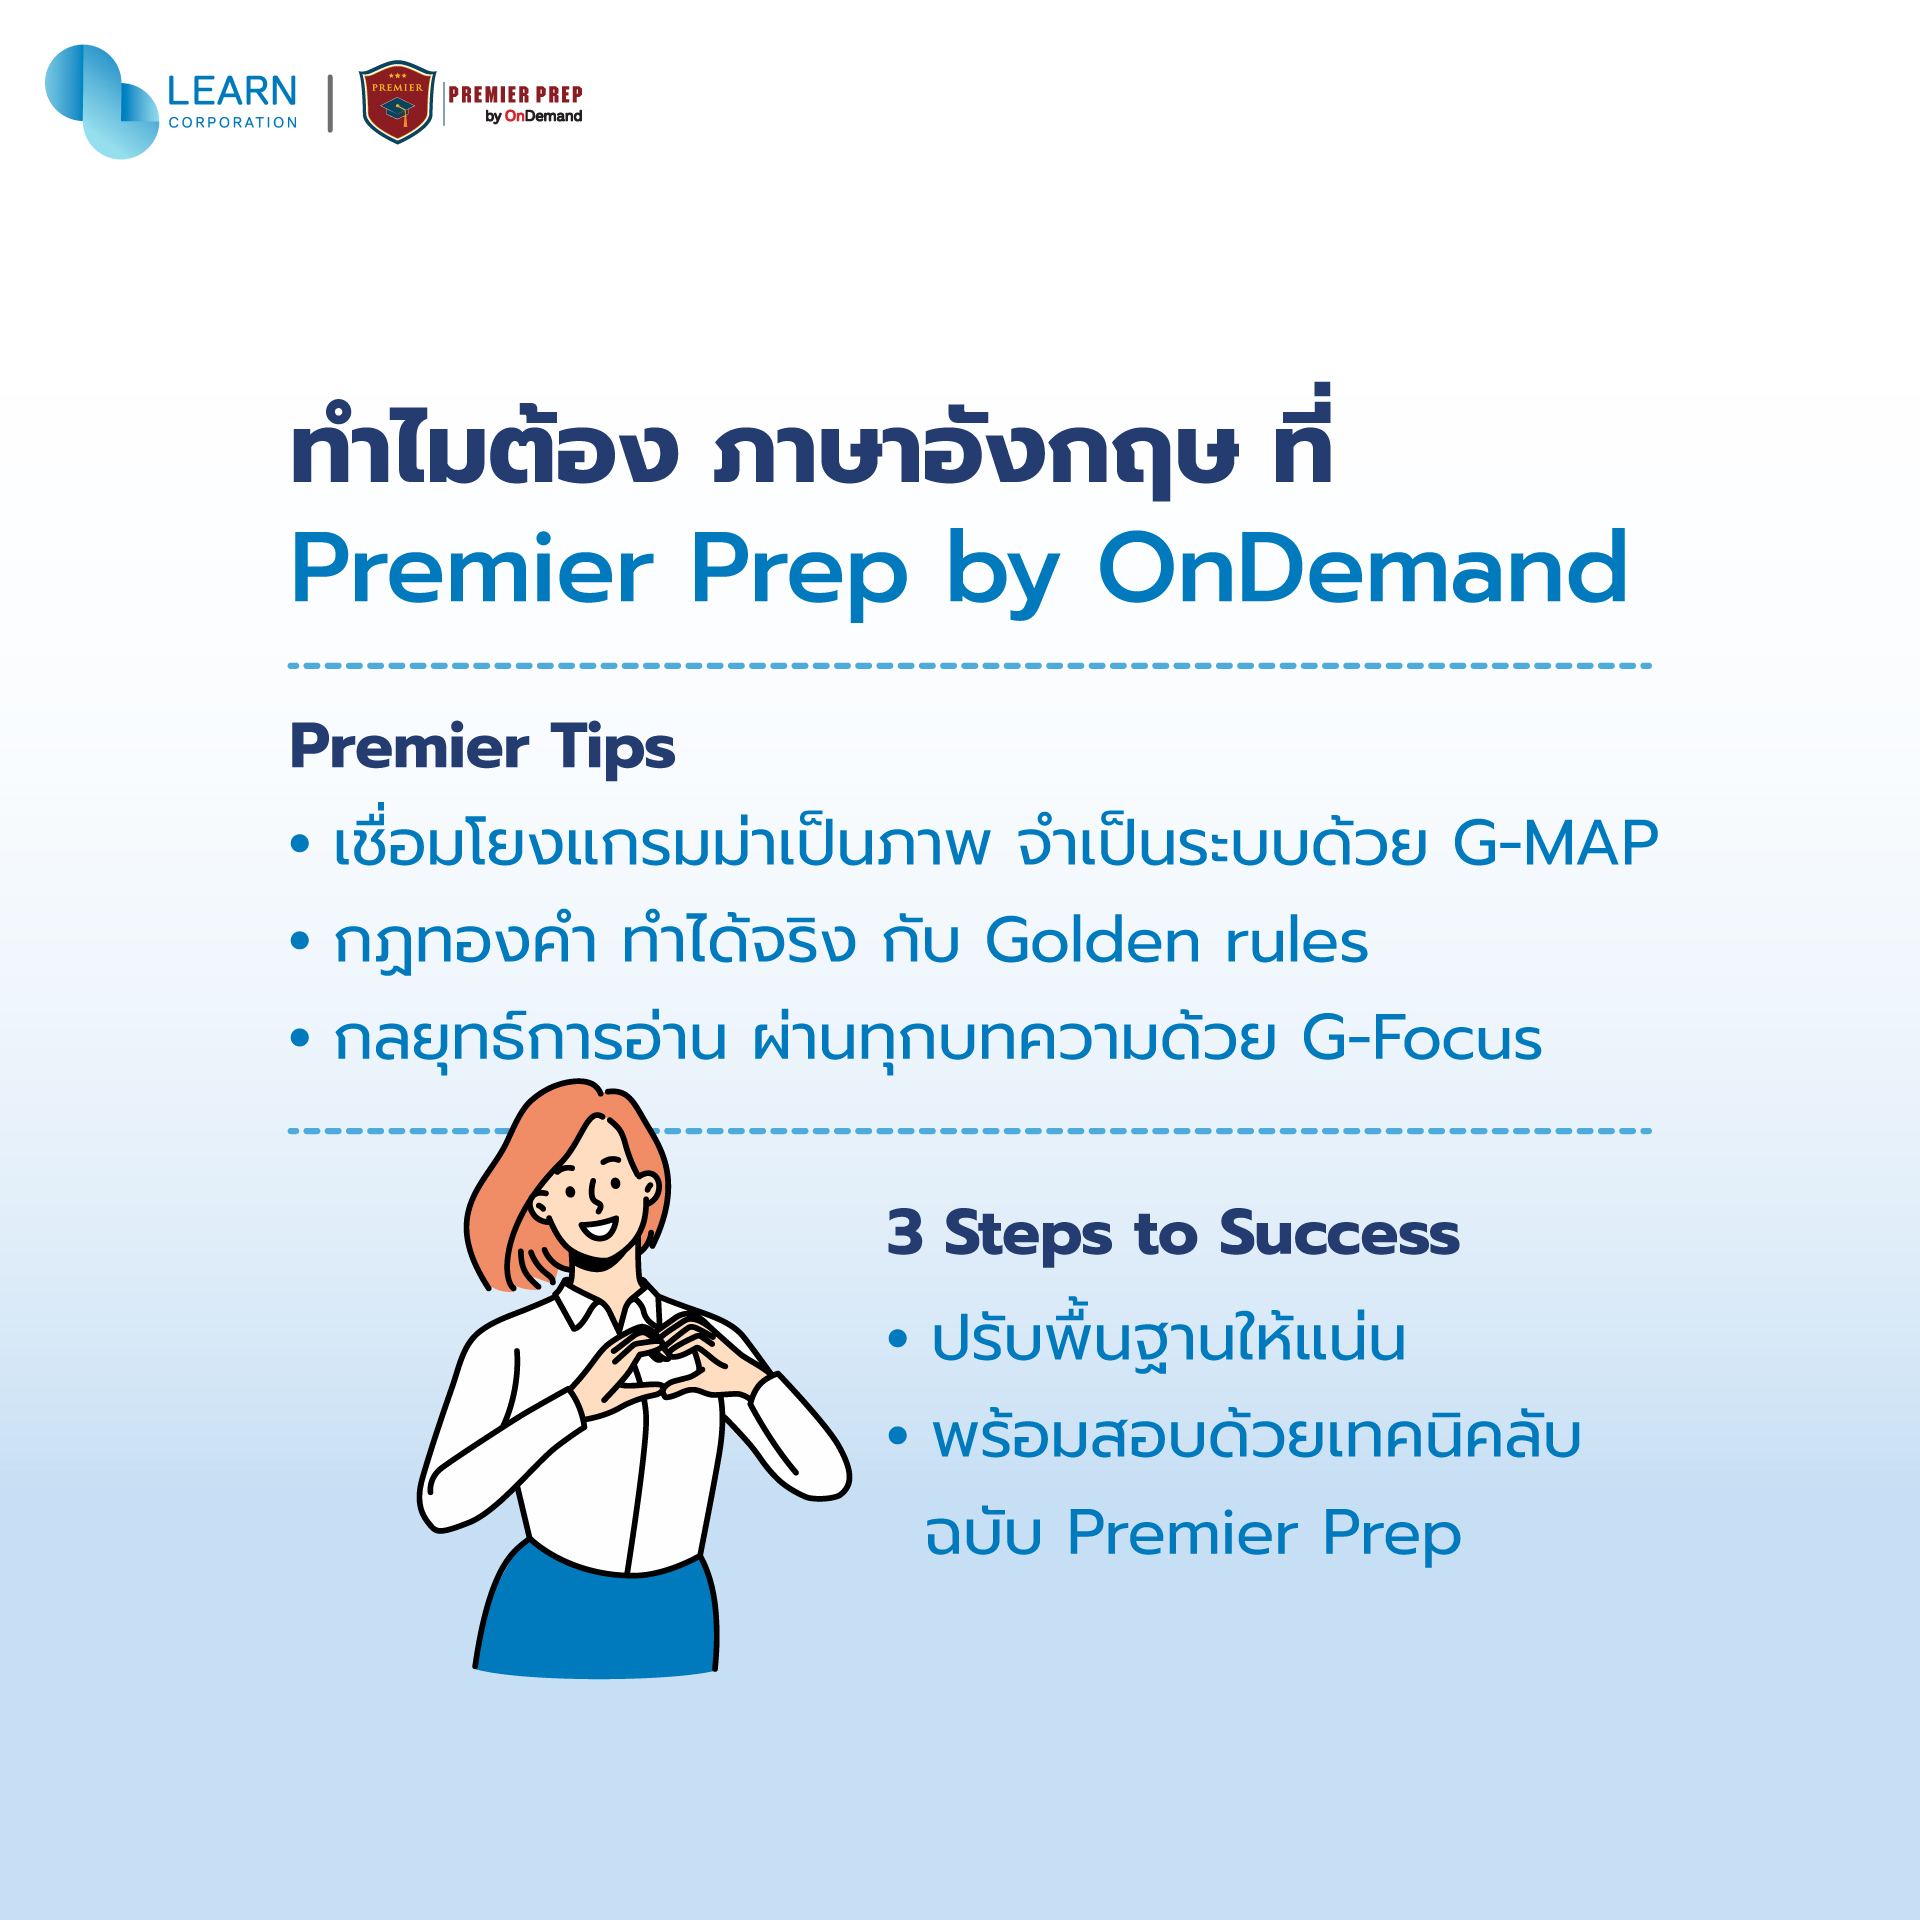 Premier Prep by OnDemand